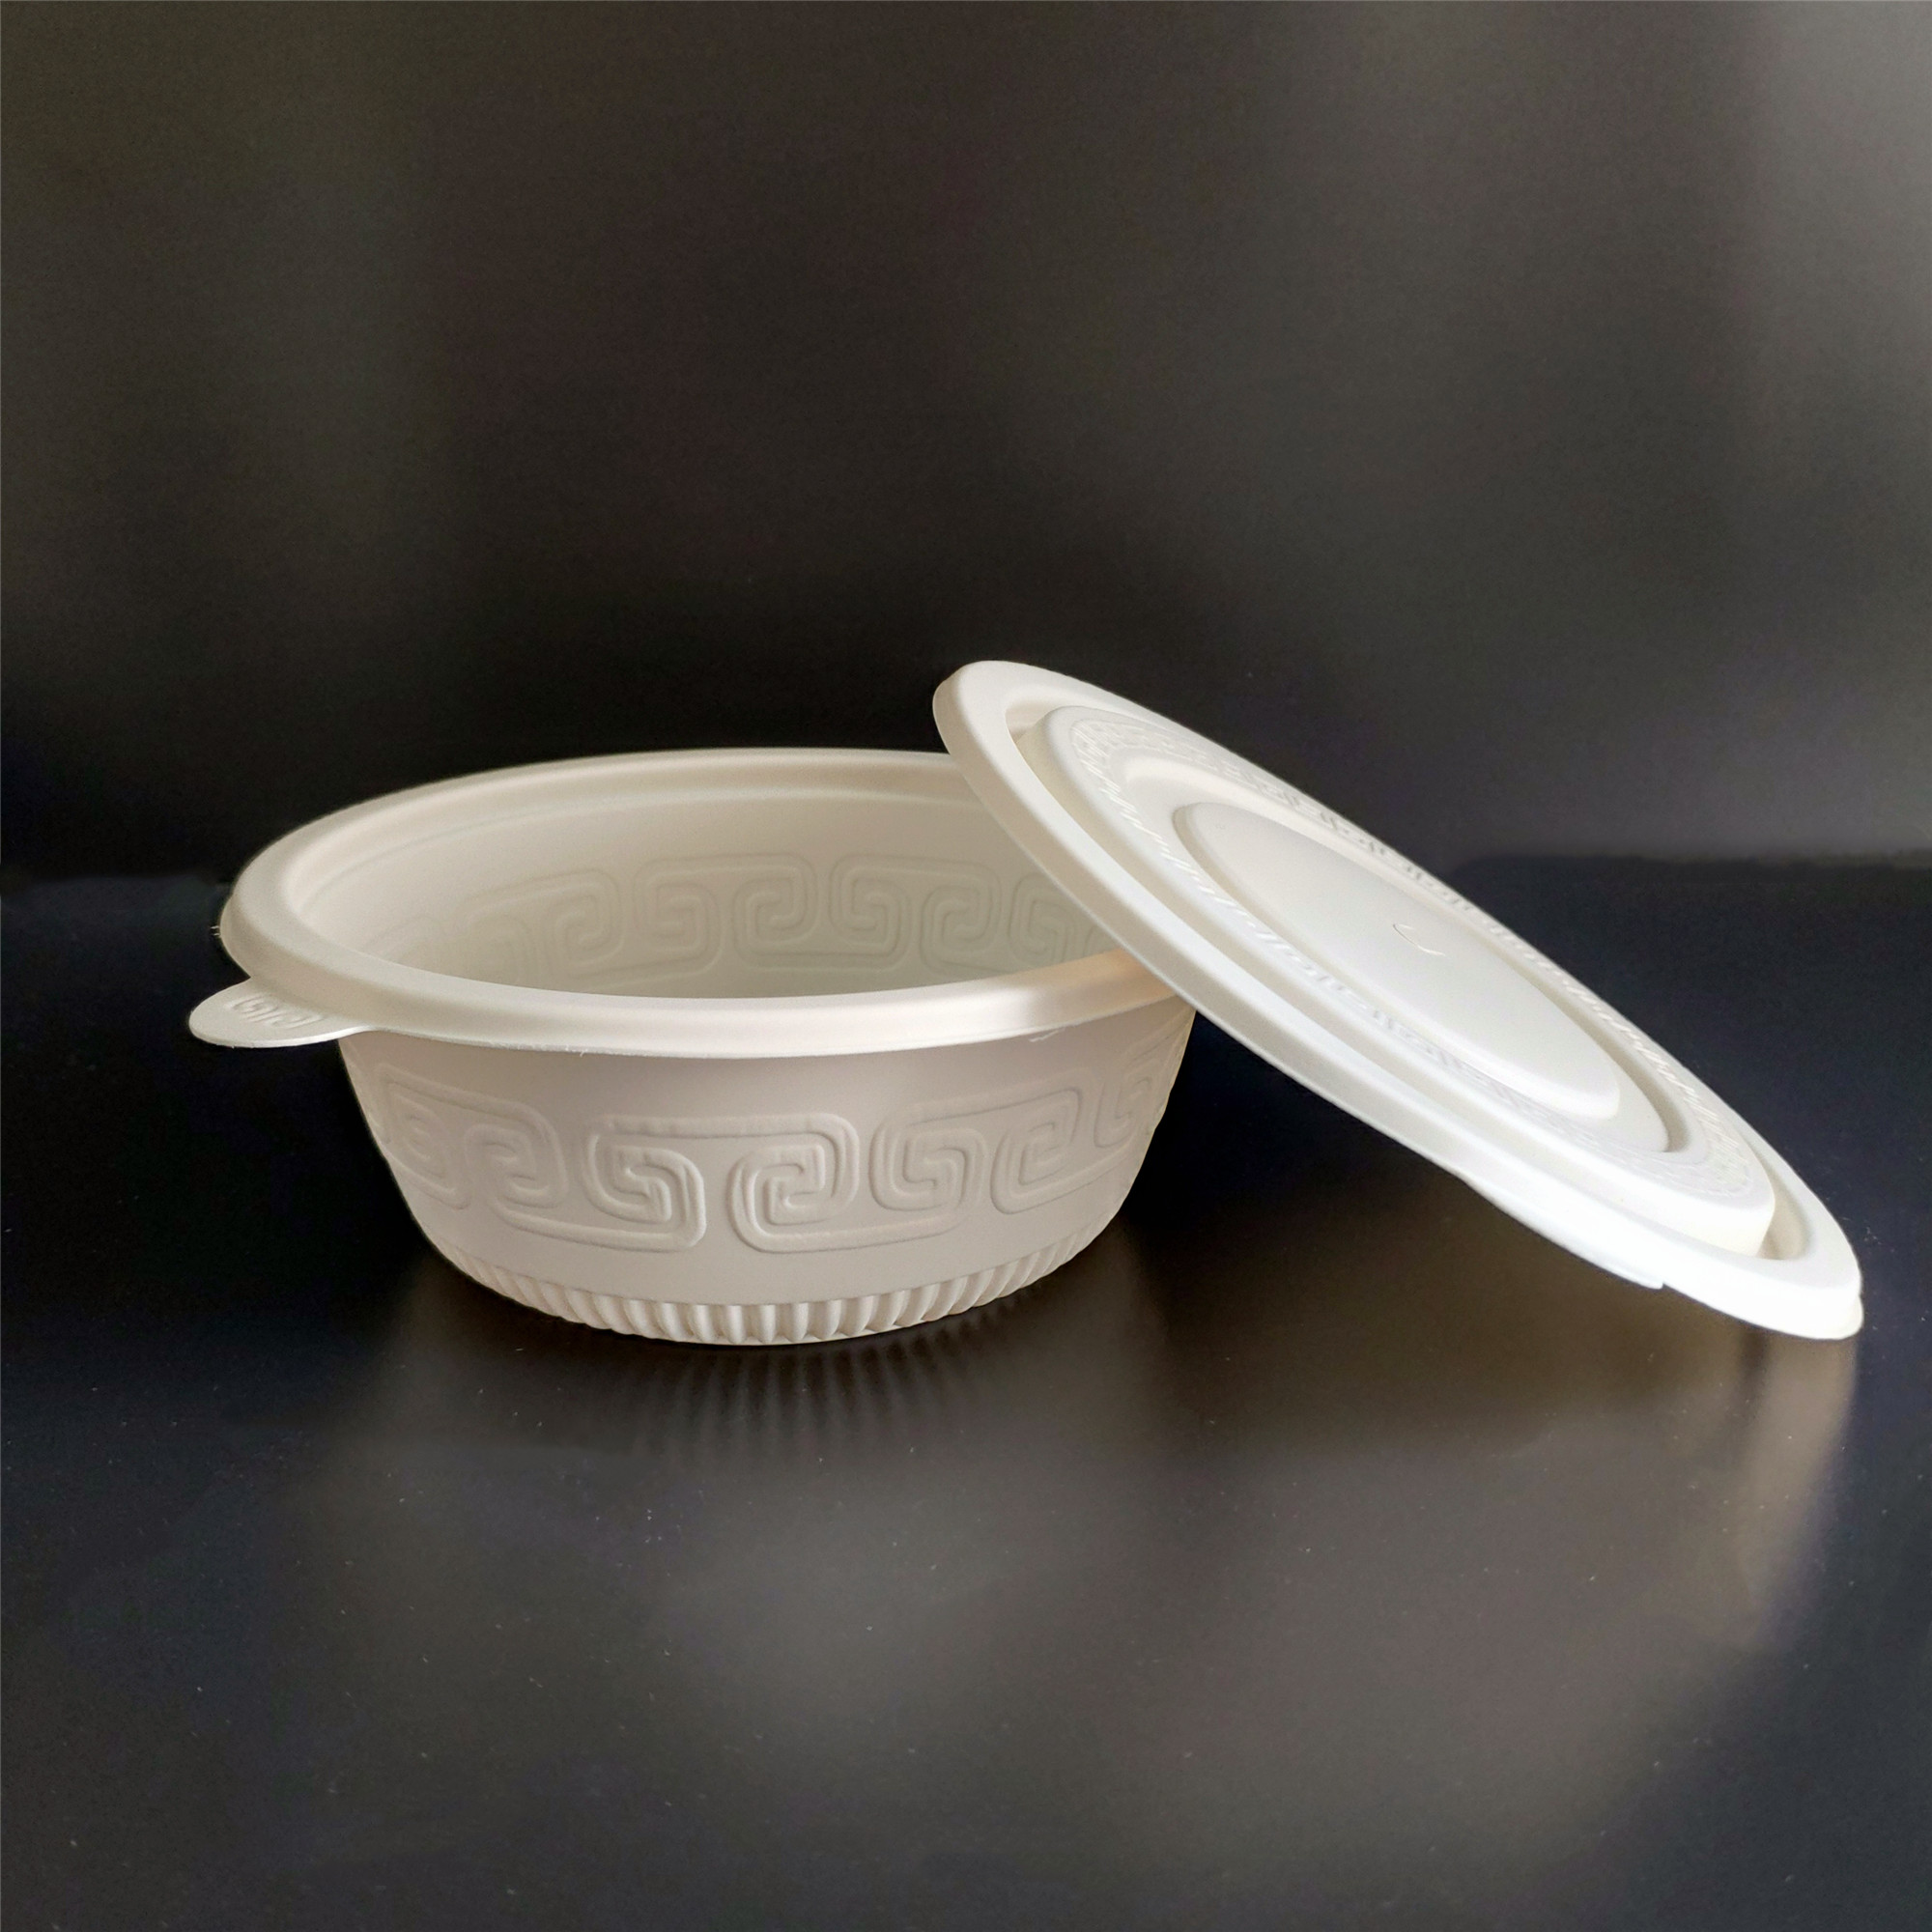 Biodegradable Soup Bowls Corn Starch Bowl Disposable With Lids